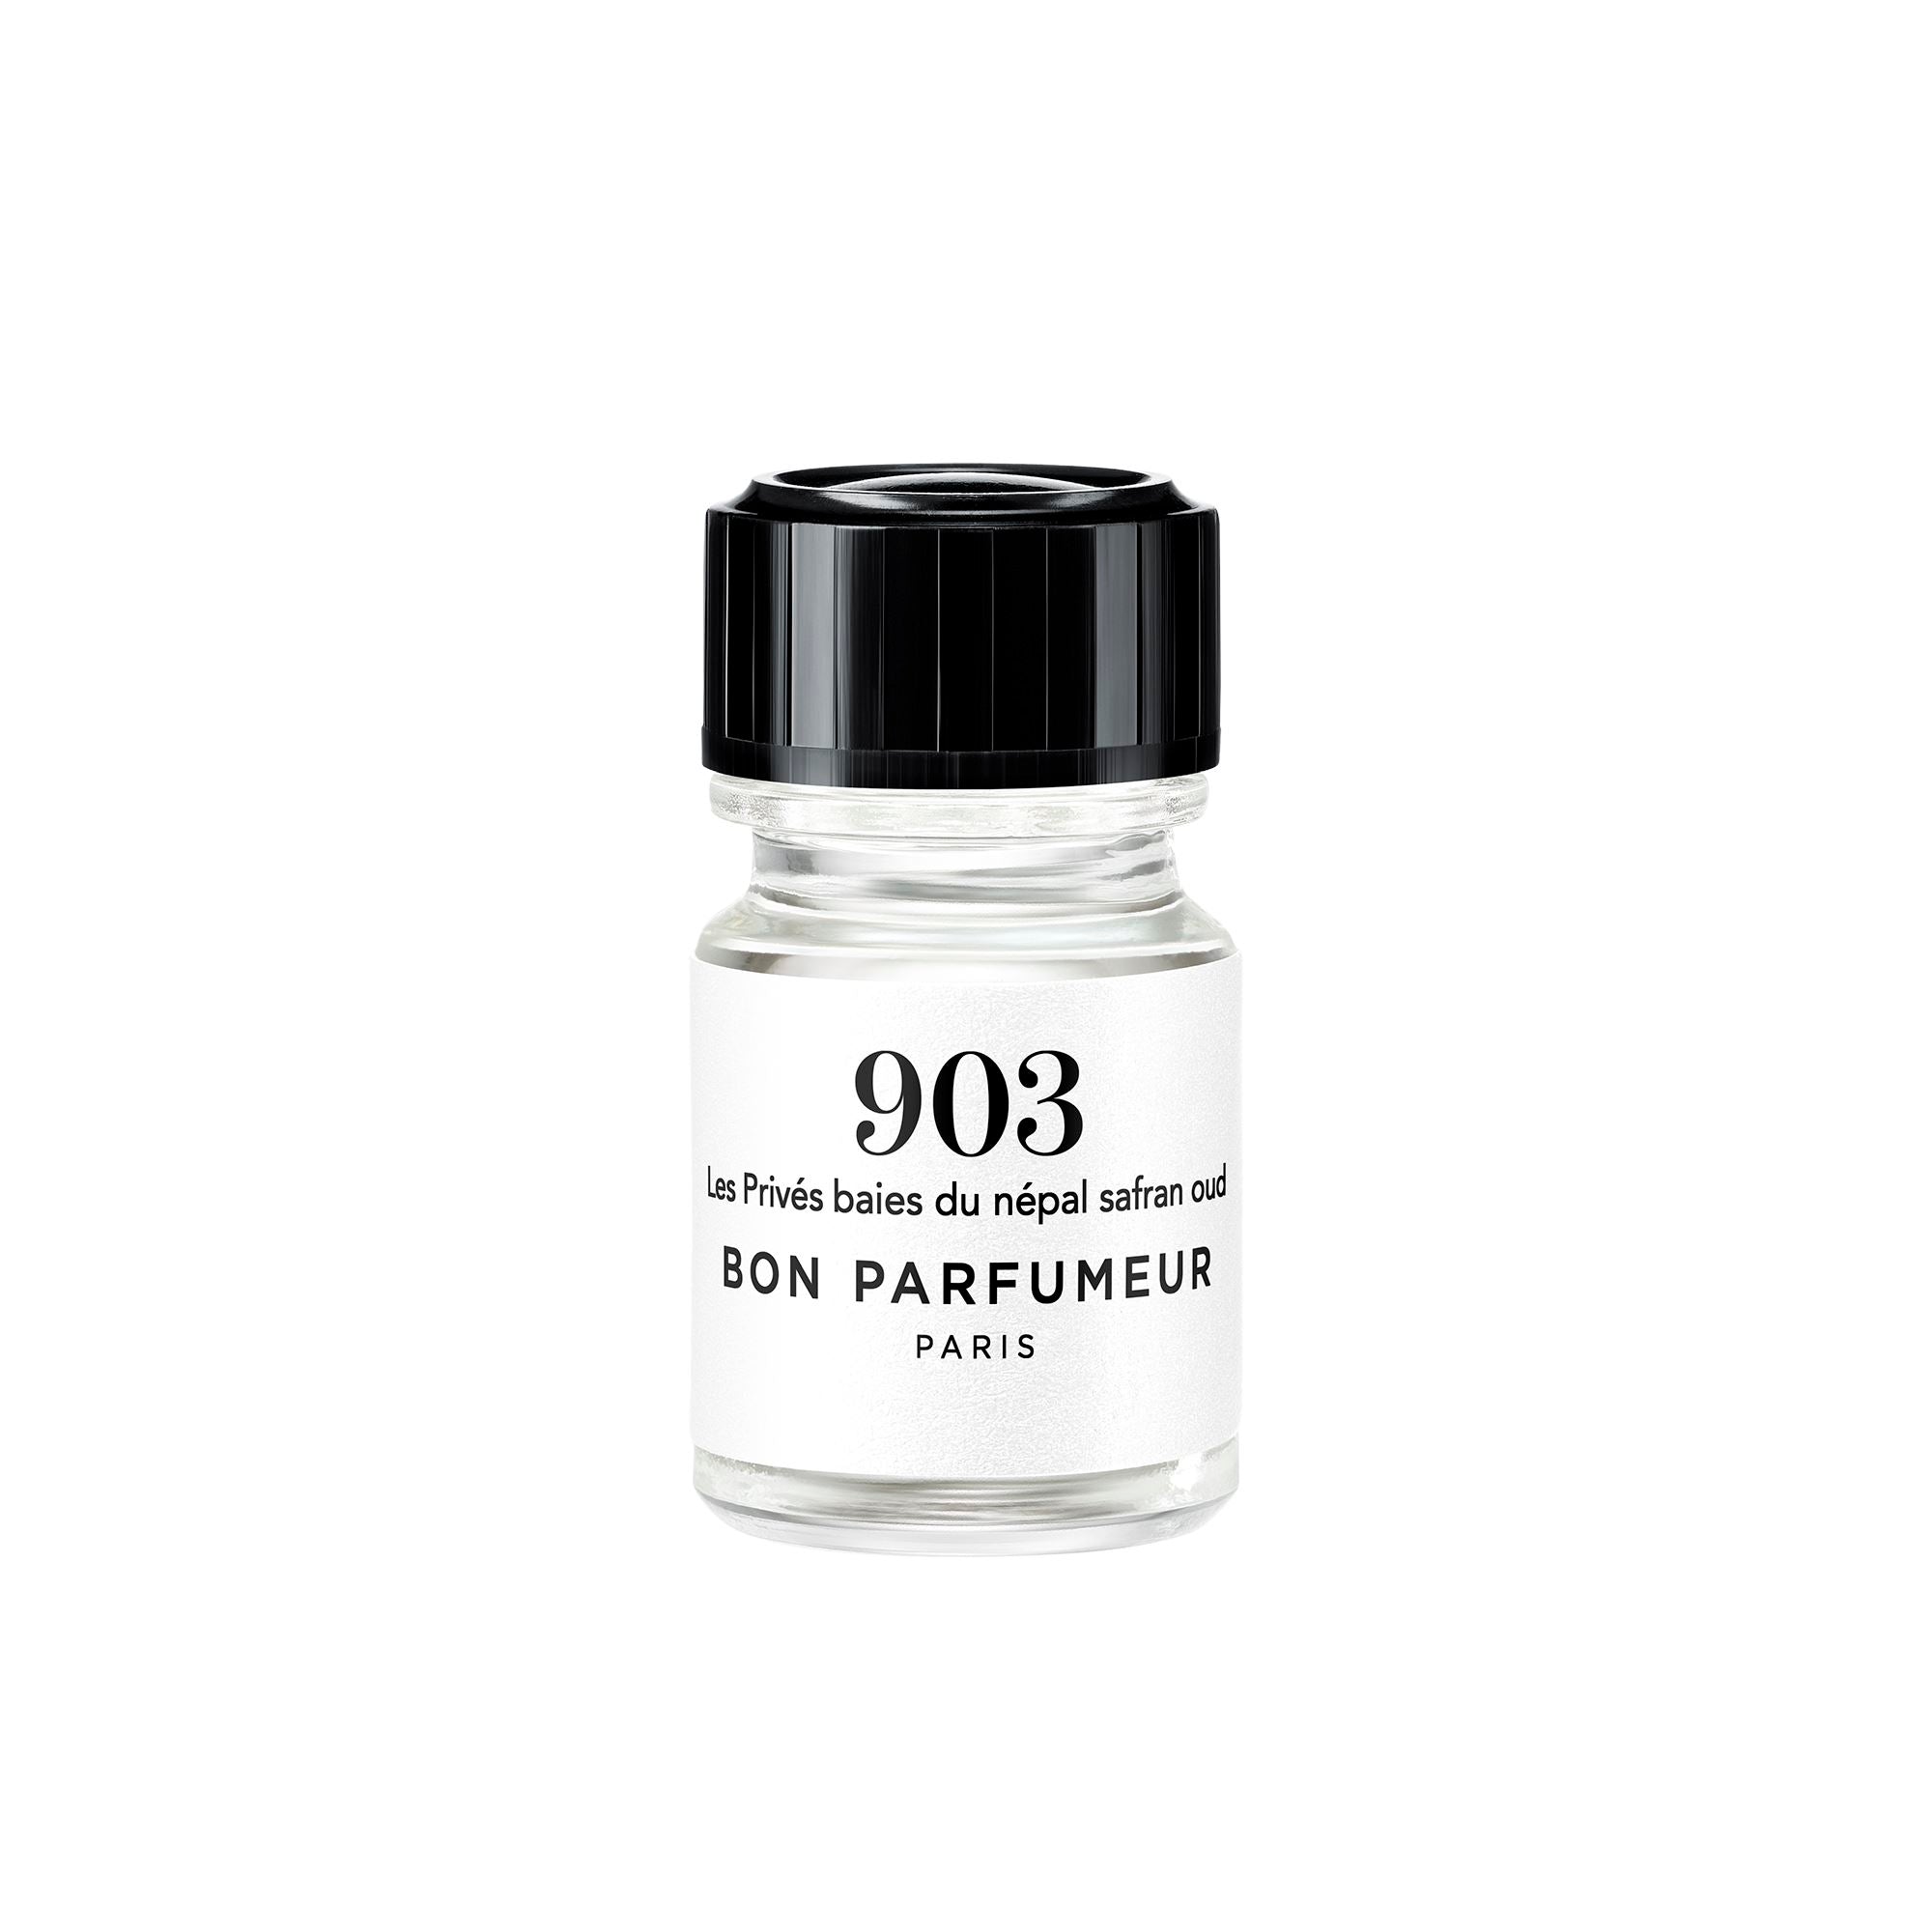 Mini-Parfums 2,5ml Bon Parfumeur France 903: Baies du népal, safran, oud 